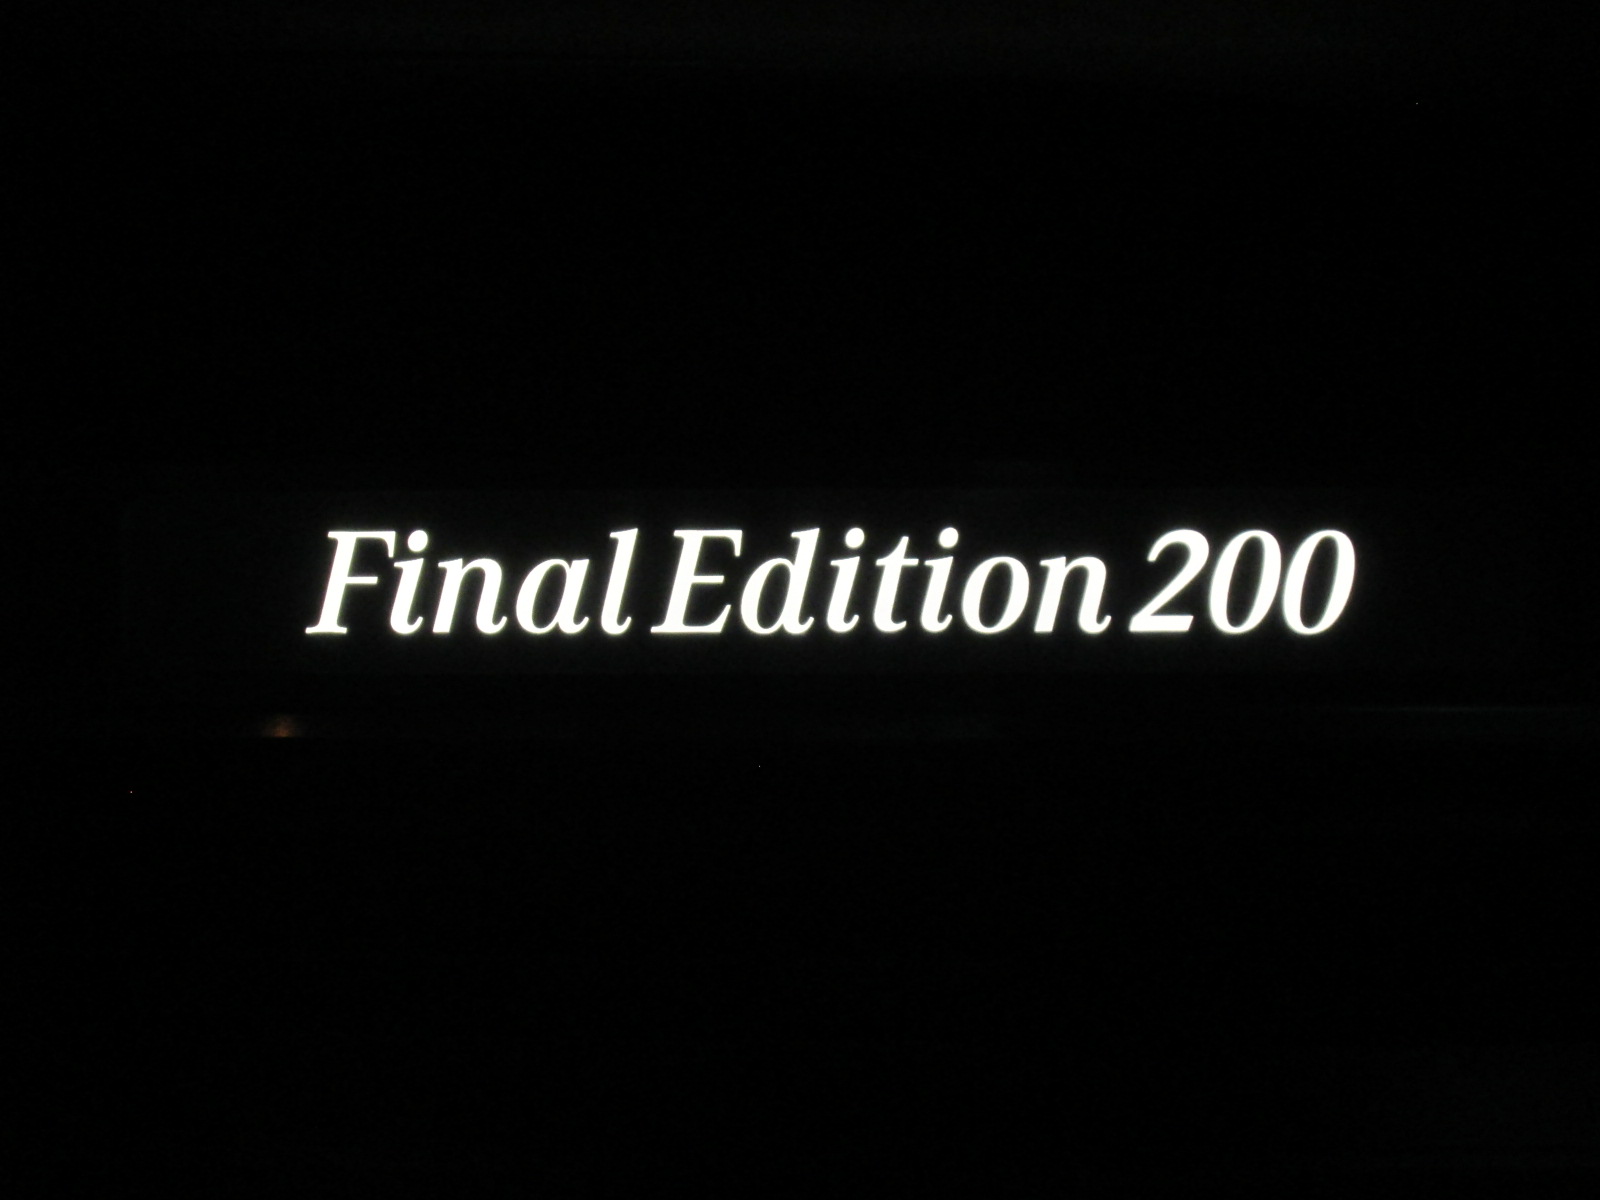 G500 Cabrio Final Edition200  世界200台限定